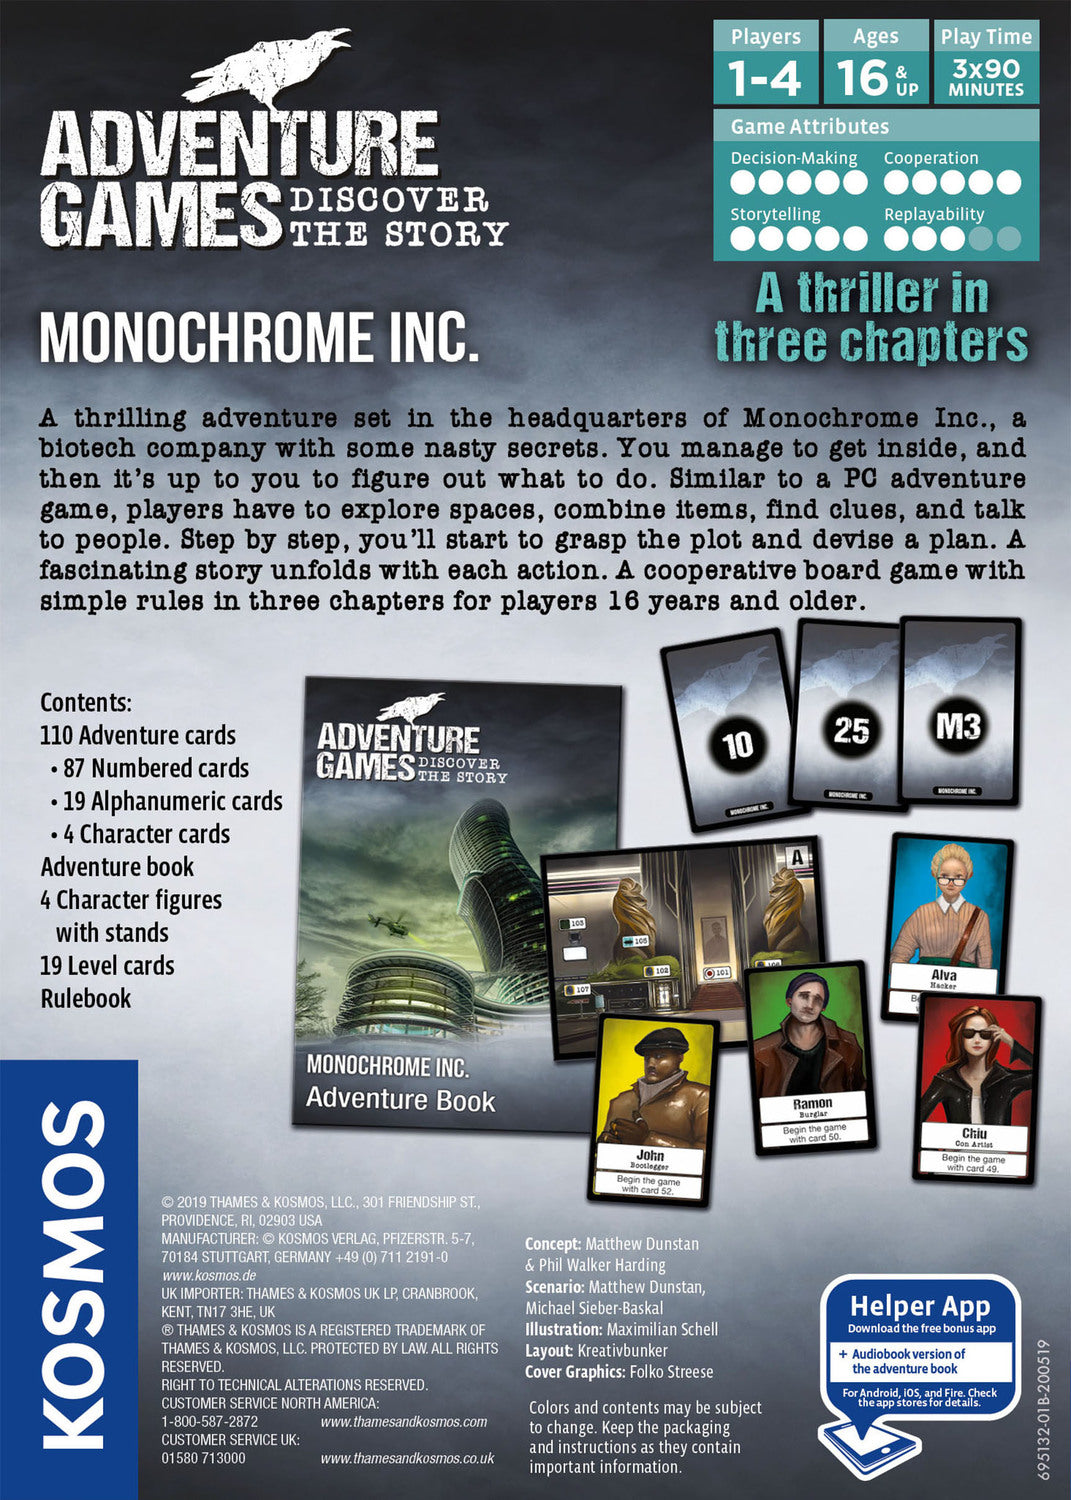 Monochrome INC. Adventure Game